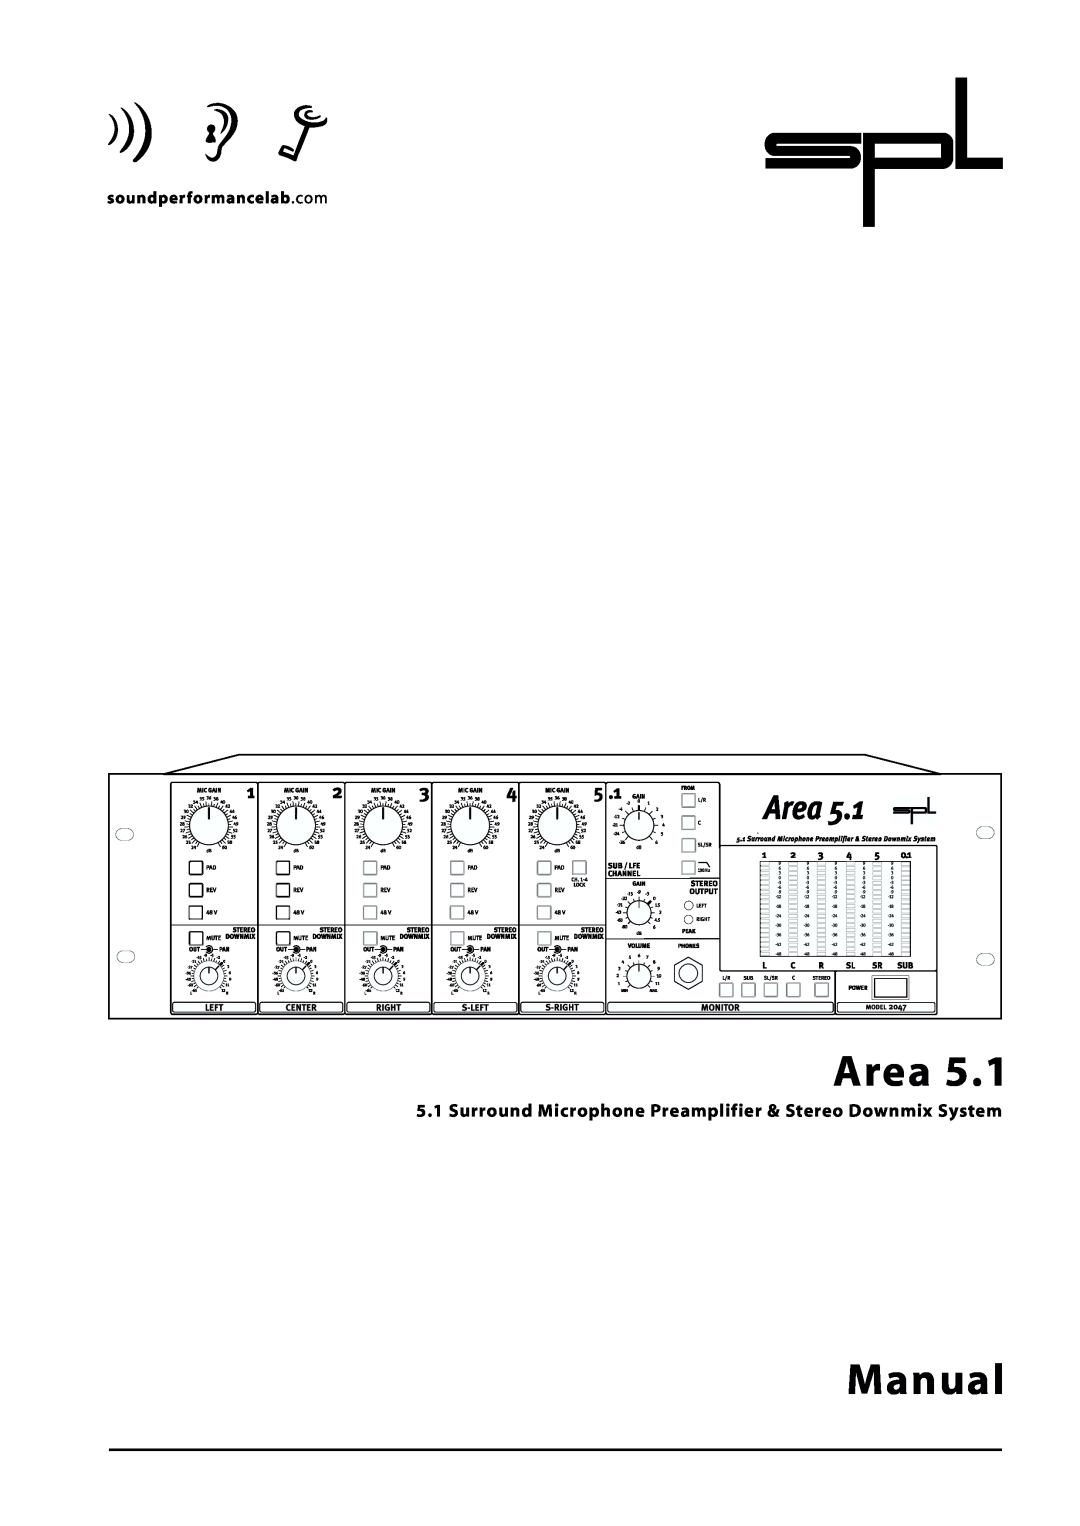 Sound Performance Lab Area 5.1 manual Manual 